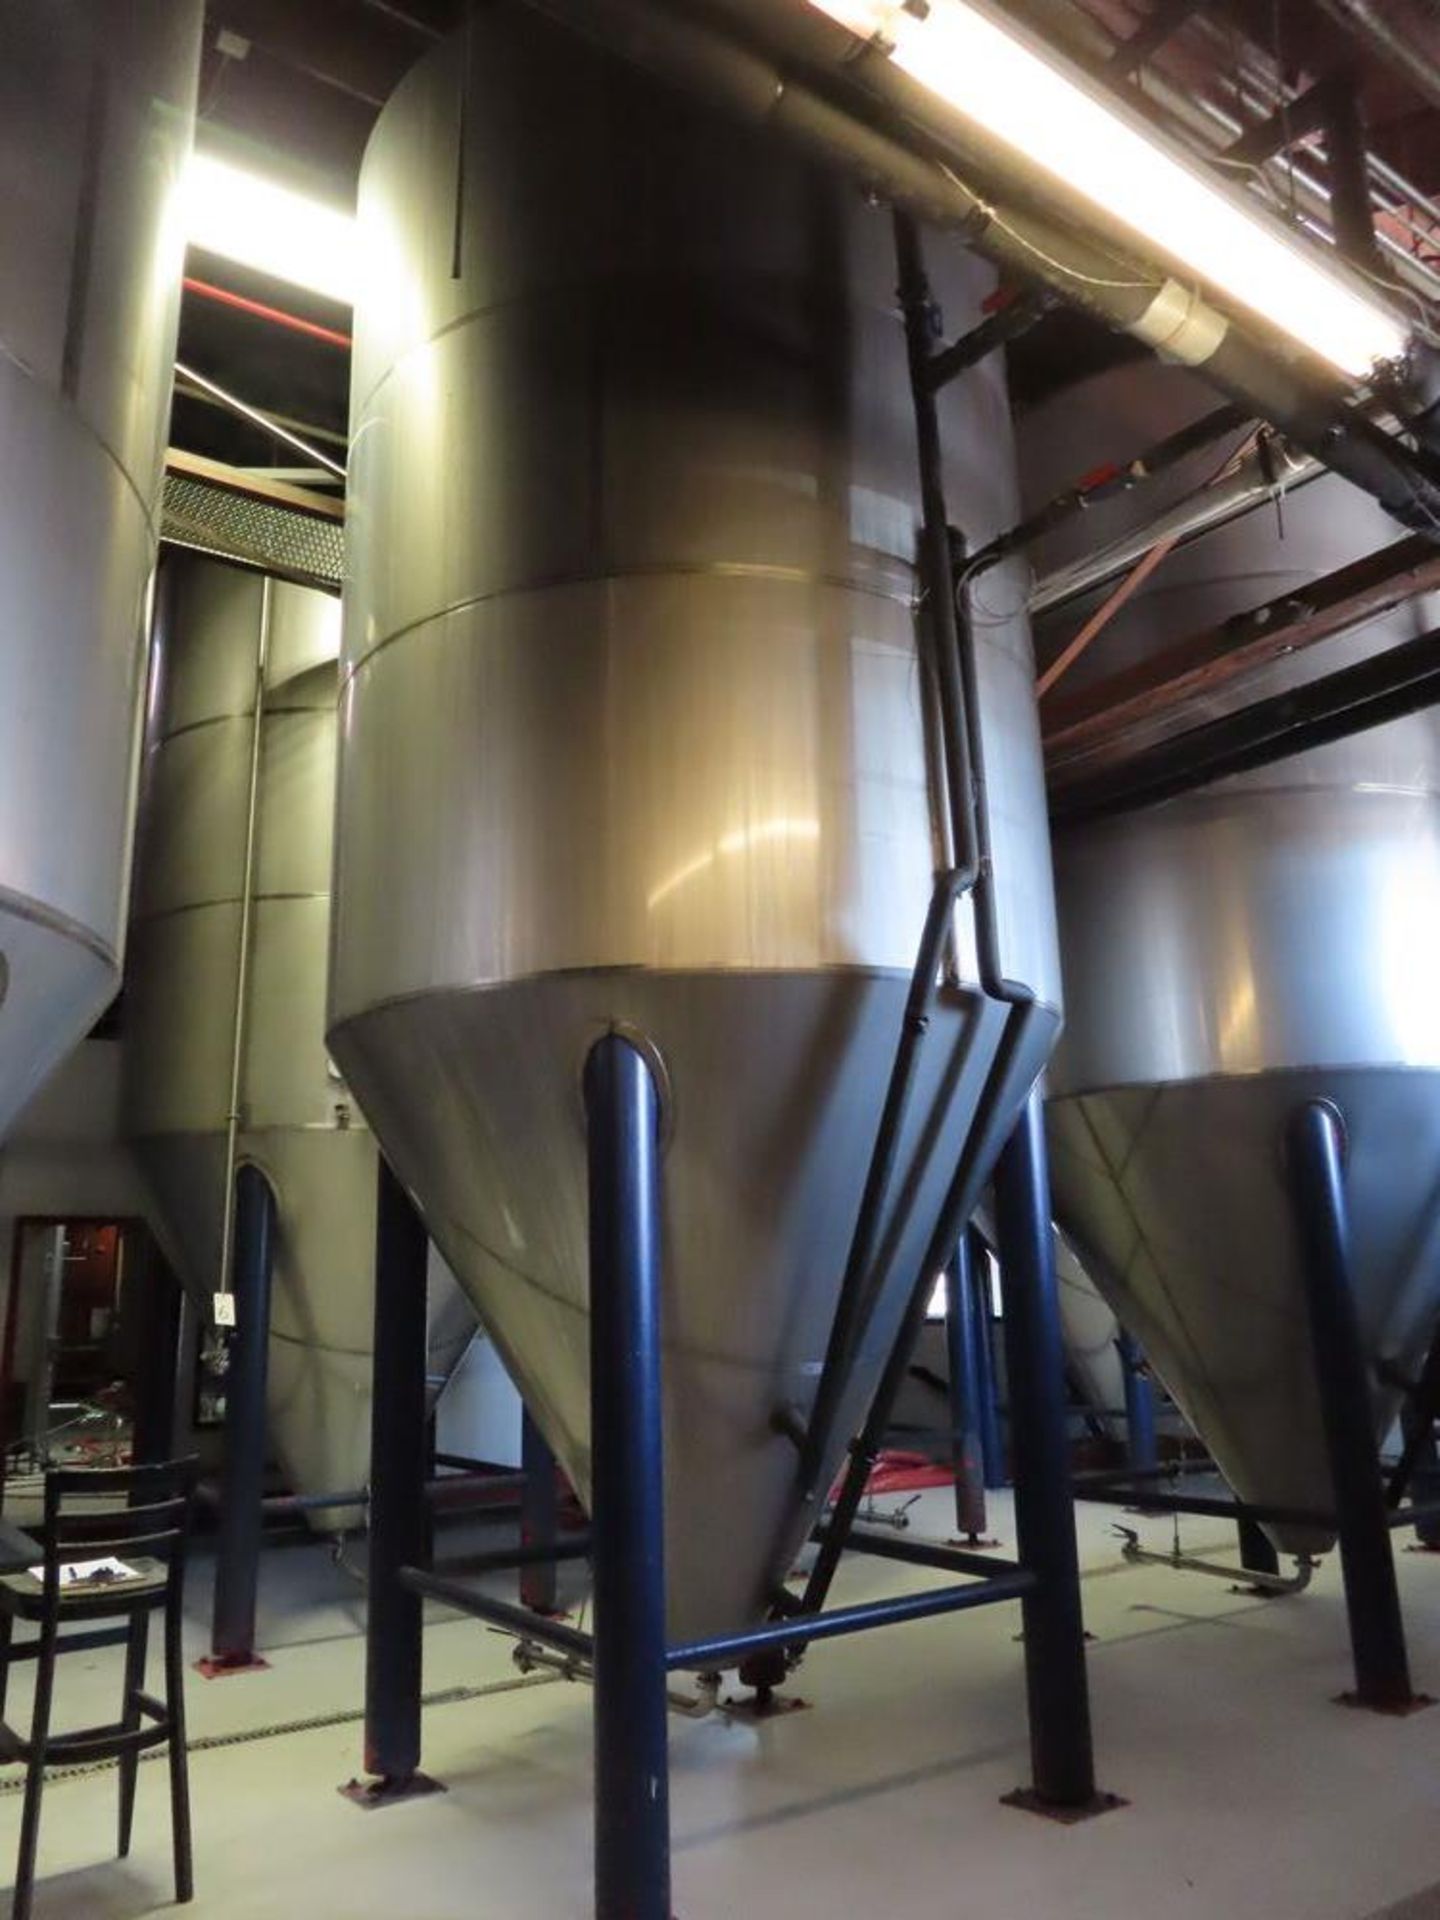 Santa Rosa Approx. 125 BBL Beer fermentor. - Image 2 of 4